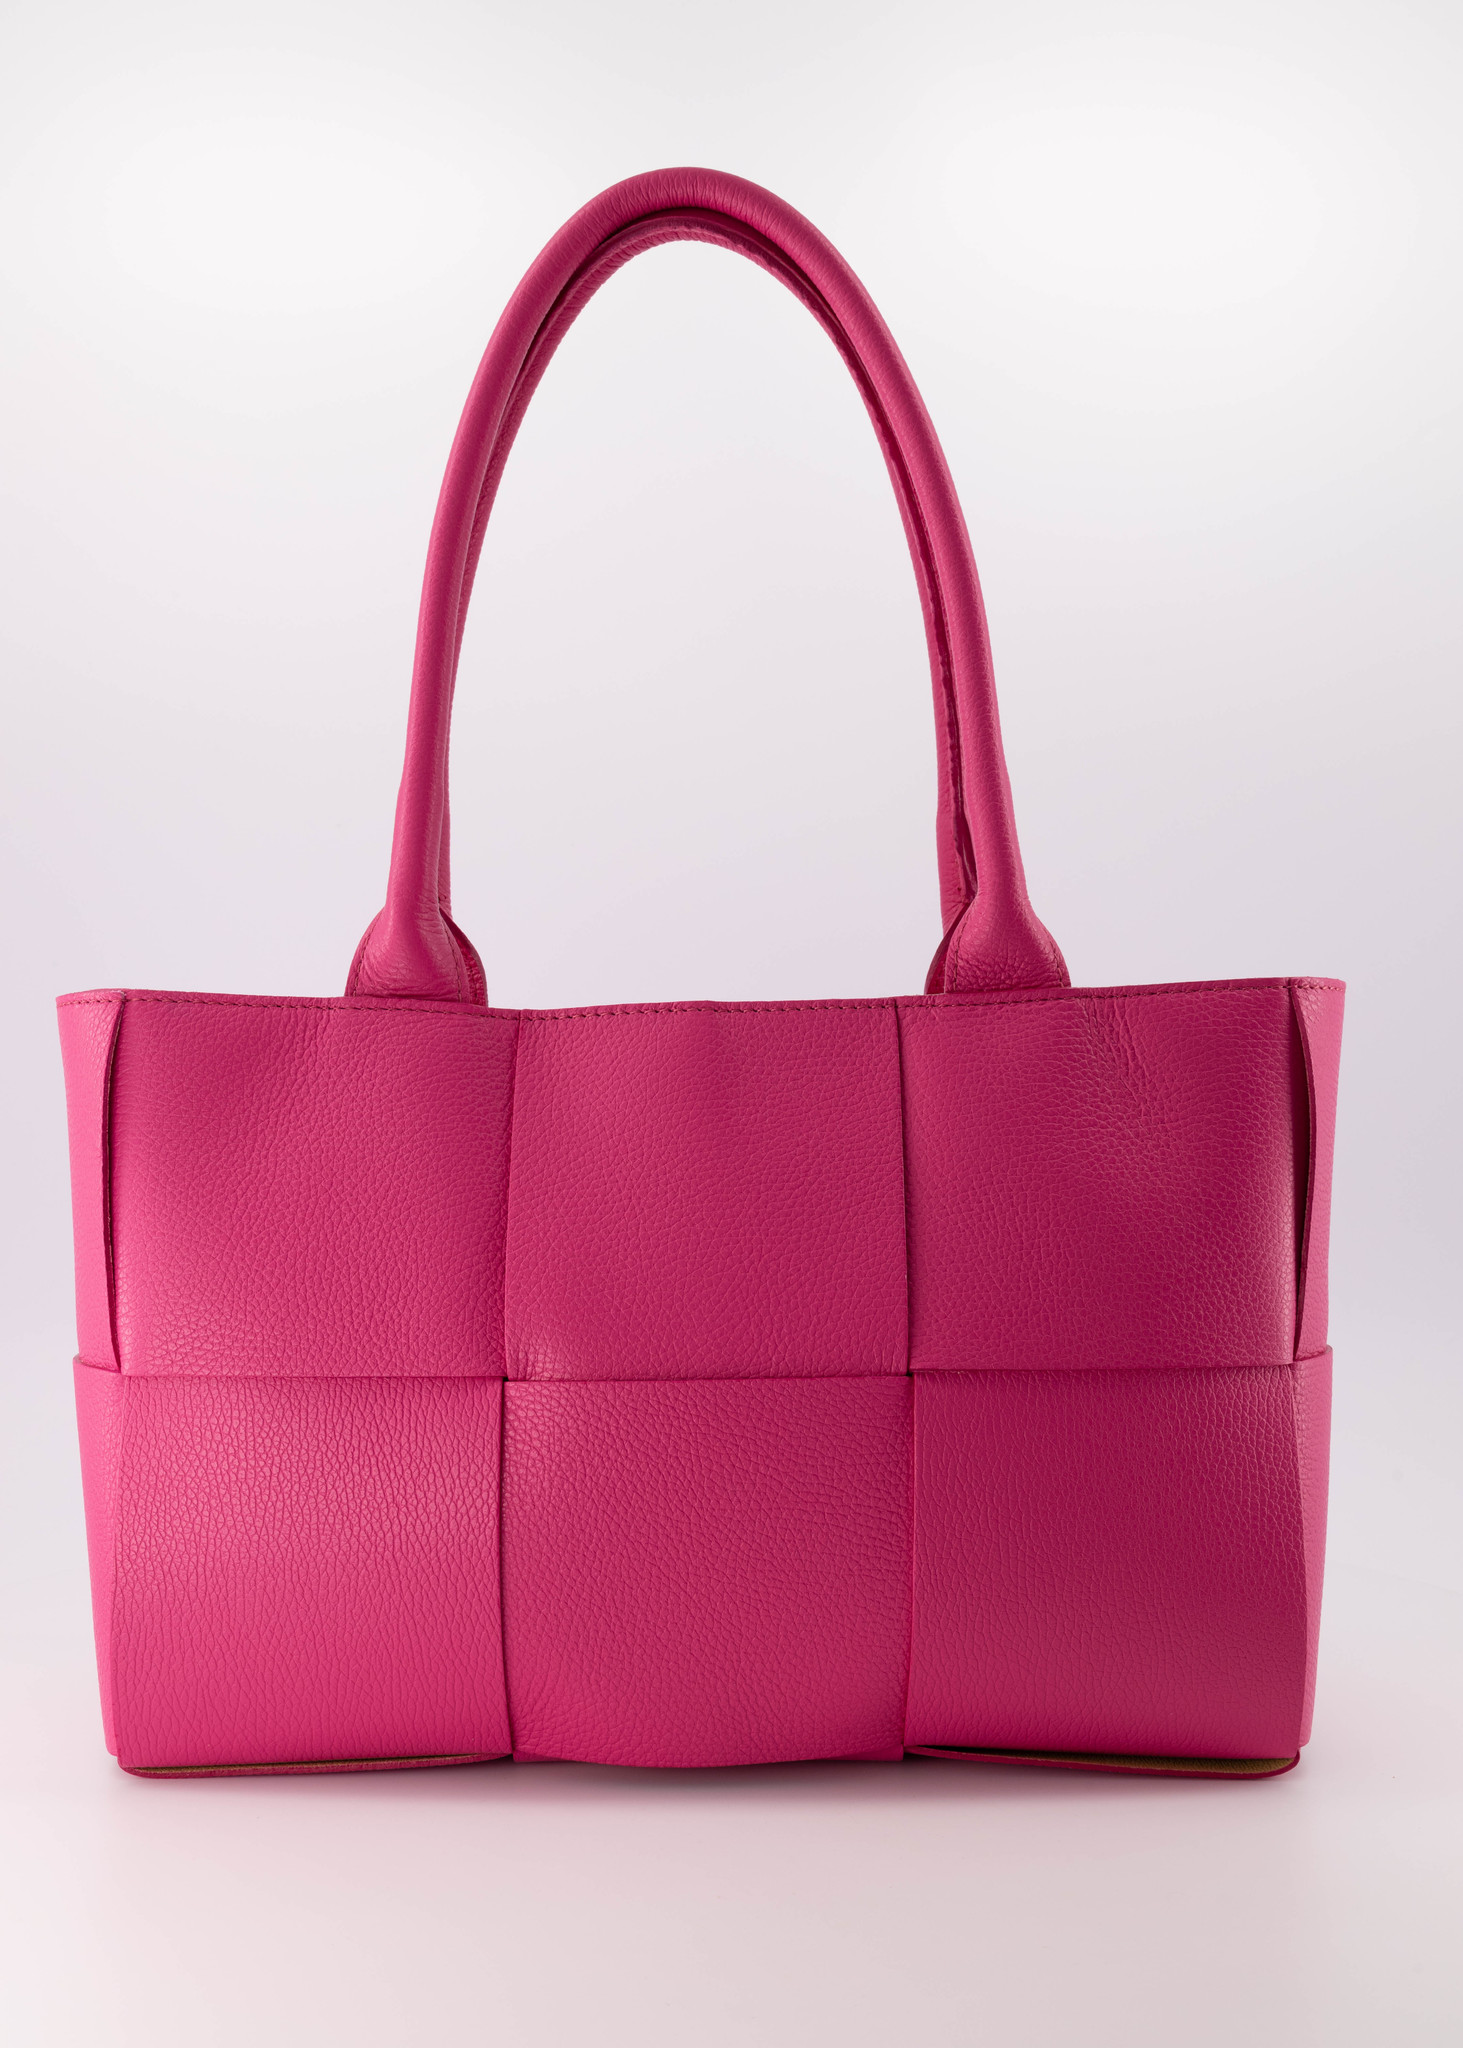 Enakshi Adorable Single Shoulder Bag Handbag for Sharon Doll Clothing  Accessories|Collectibles : Amazon.in: Toys & Games